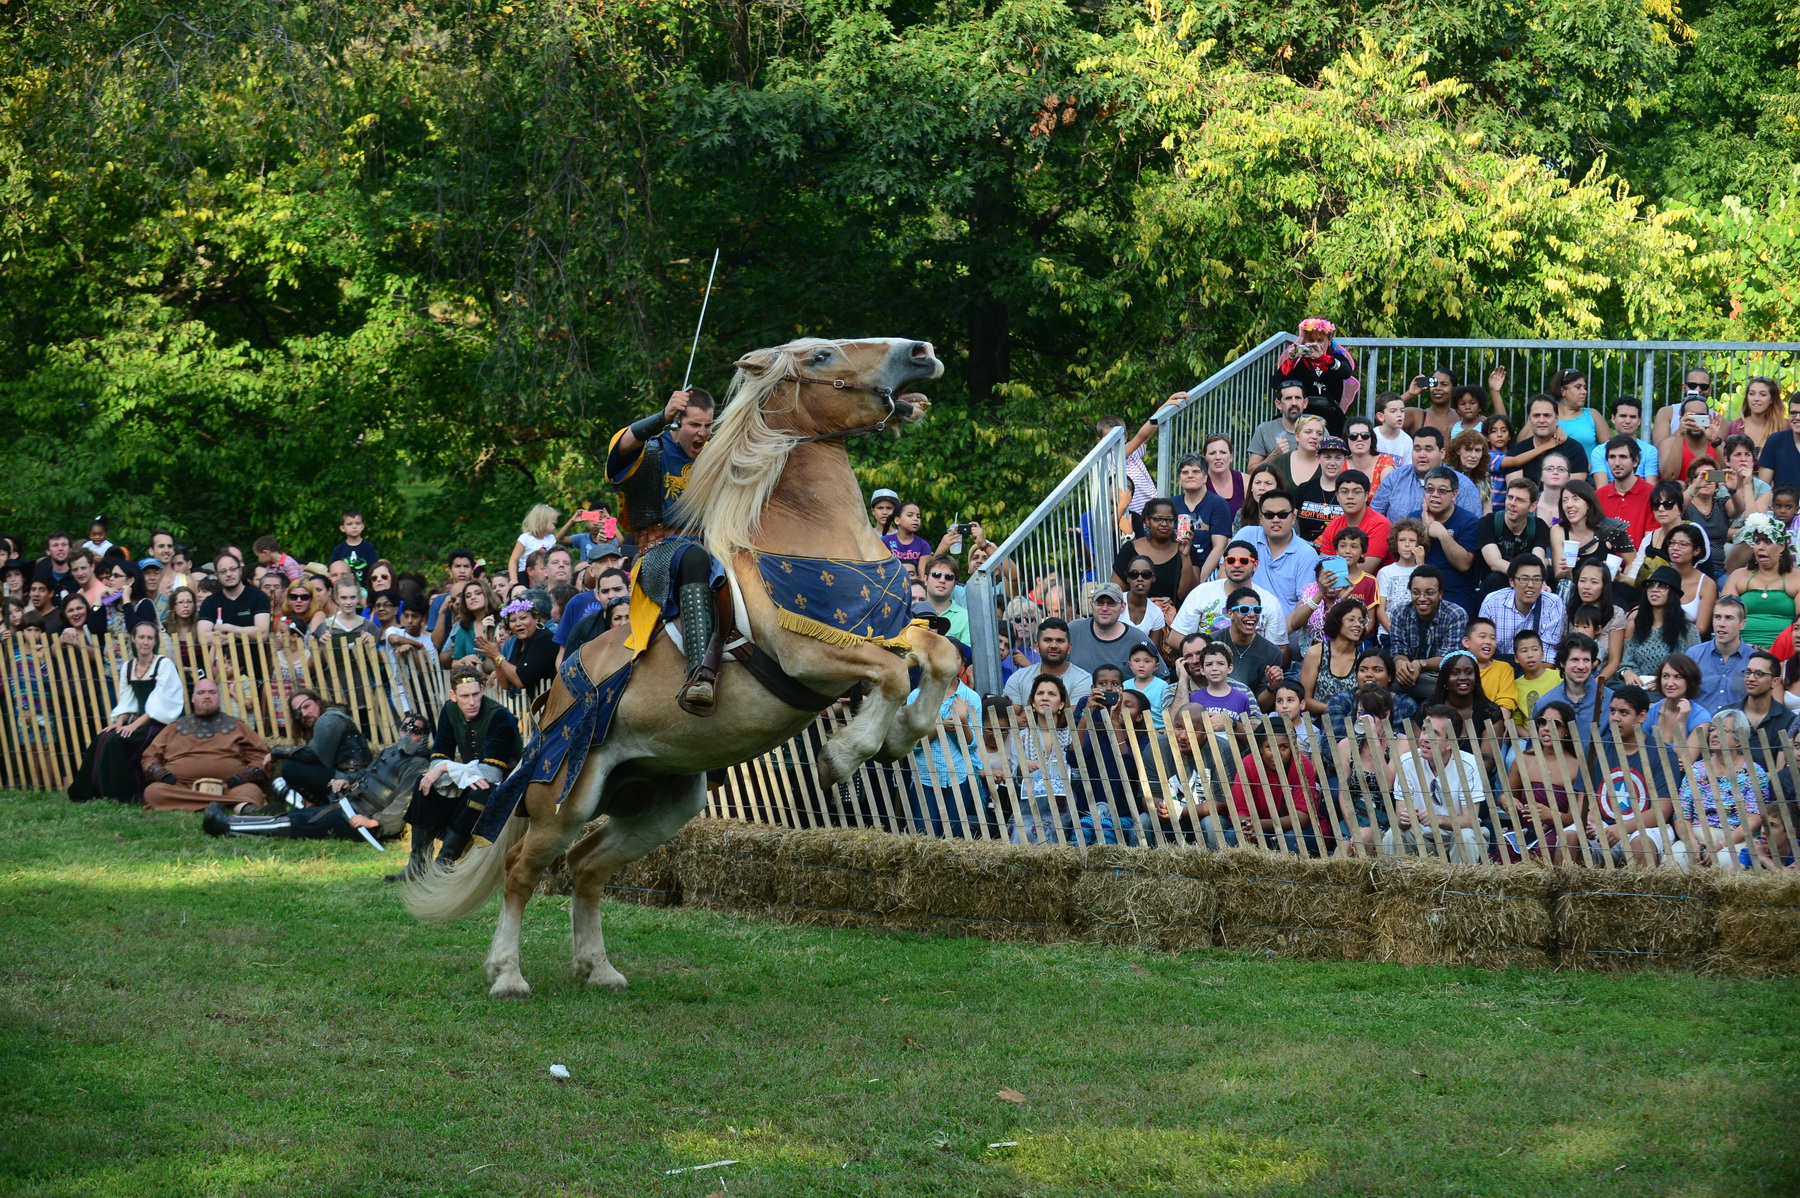 35th Annual Medieval Festival